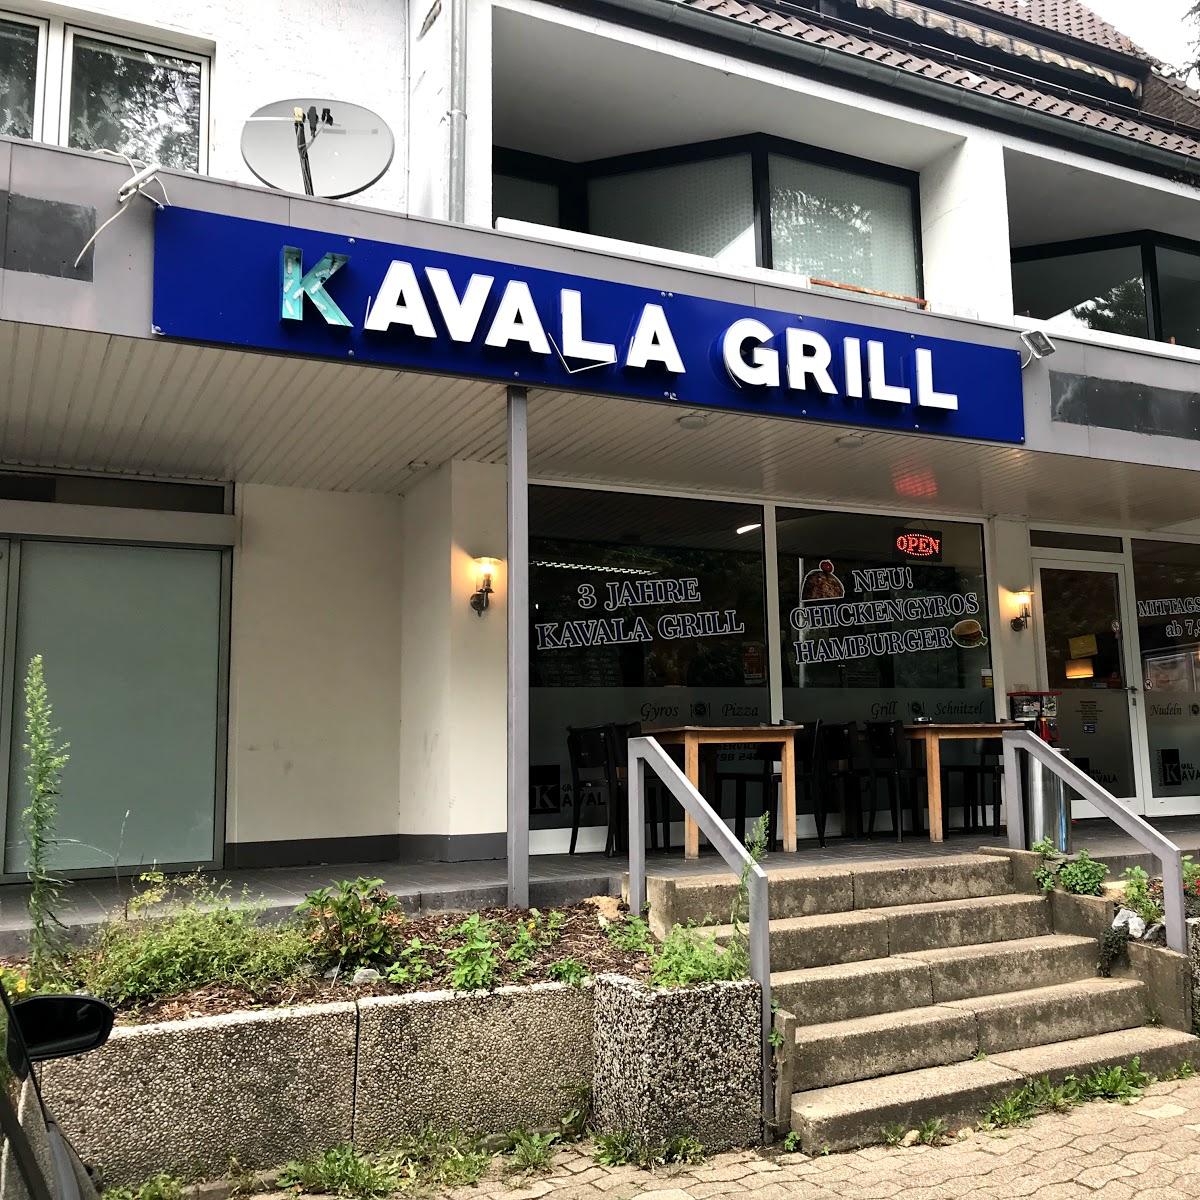 Restaurant "Grill Kavala" in Bielefeld